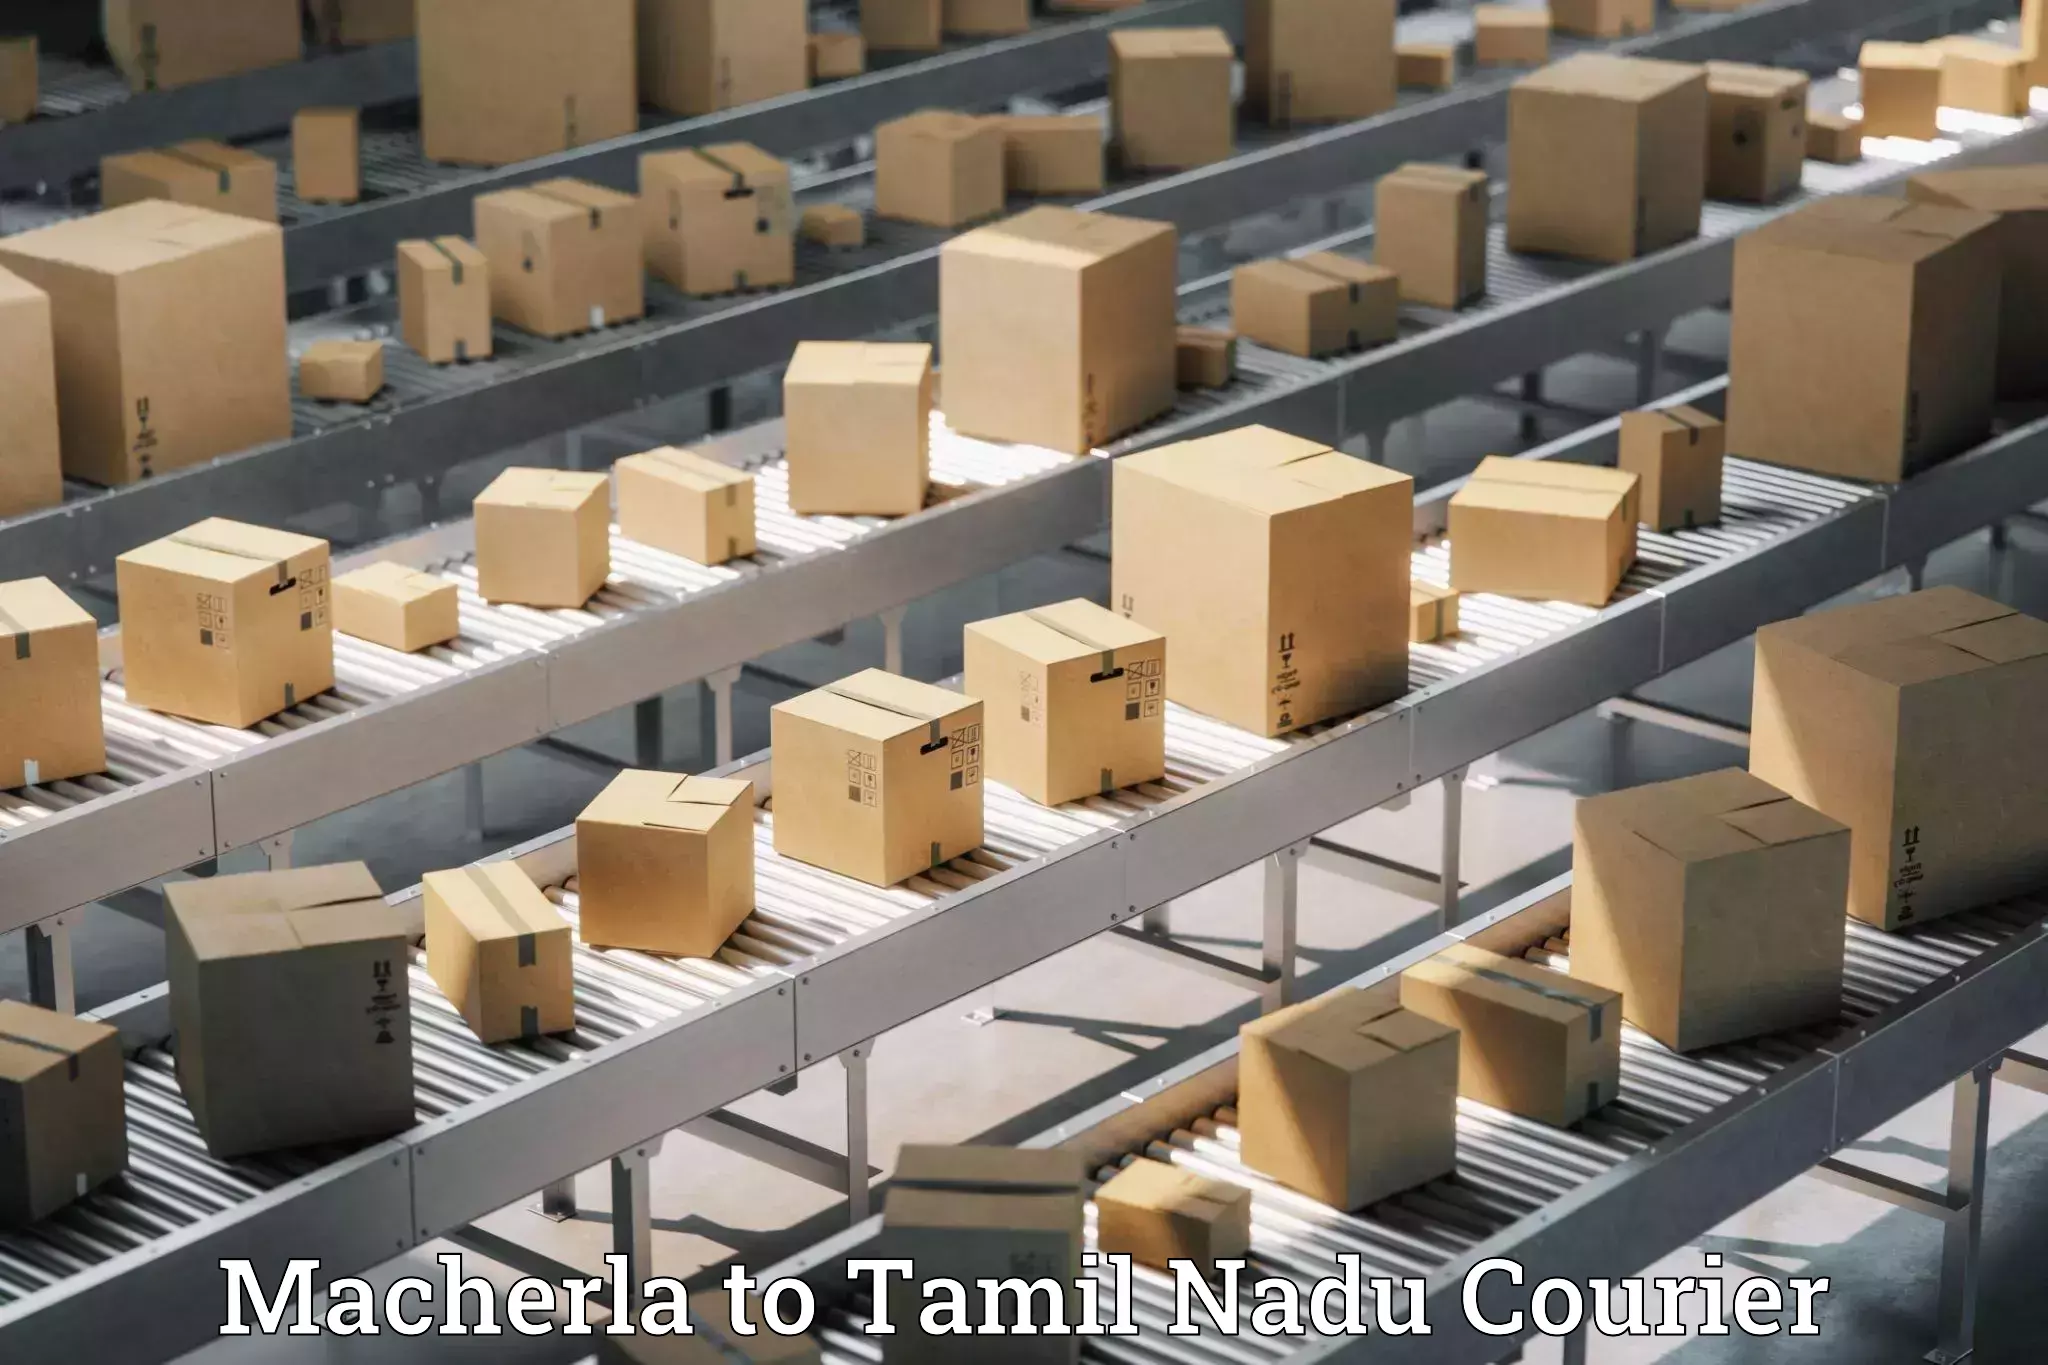 Courier service innovation in Macherla to Tamil Nadu